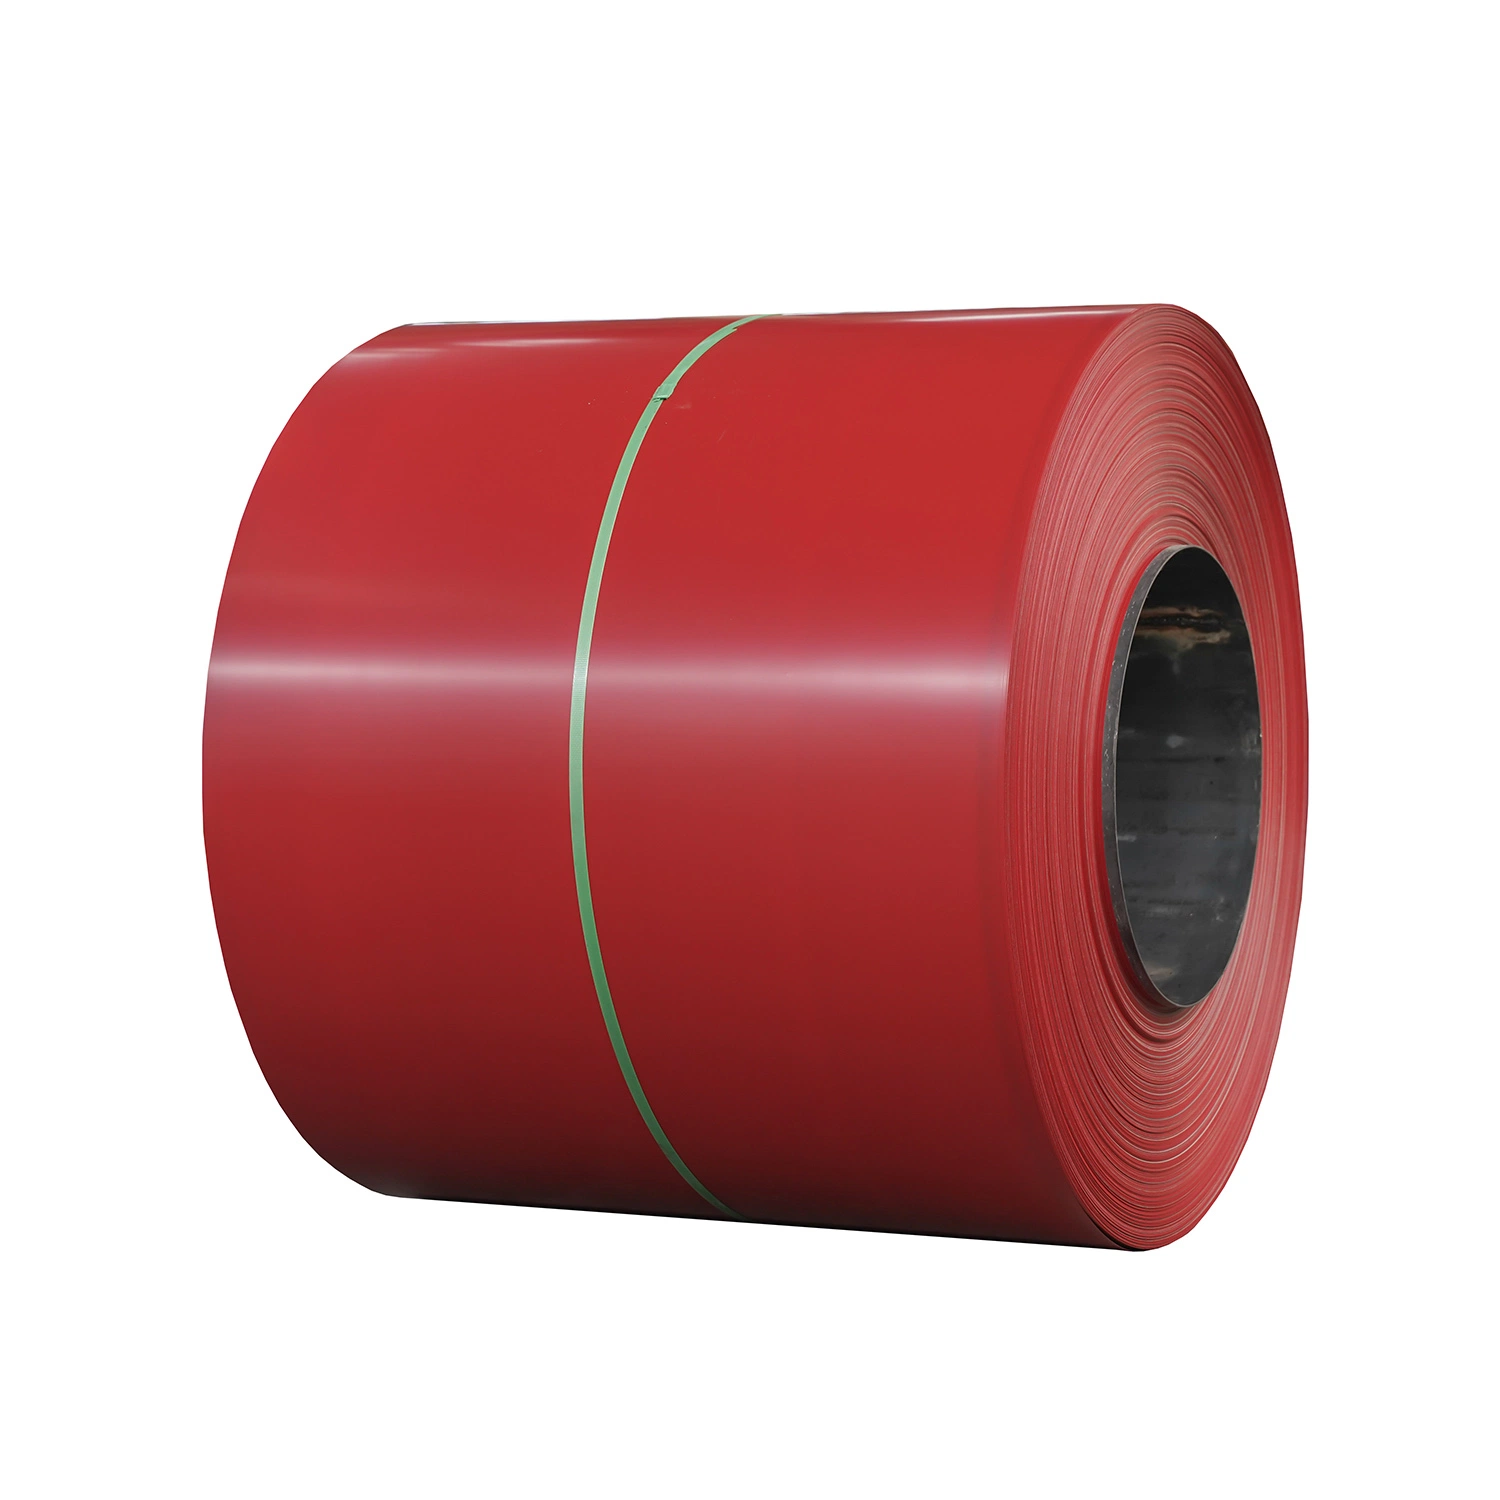 Le Zimbabwe bobine Colorcot PPGL Galvalume/Couleur de la bobine d'acier enduit bobines en acier galvanisé/0,4mm les bobines de métal teint bobines en aluminium